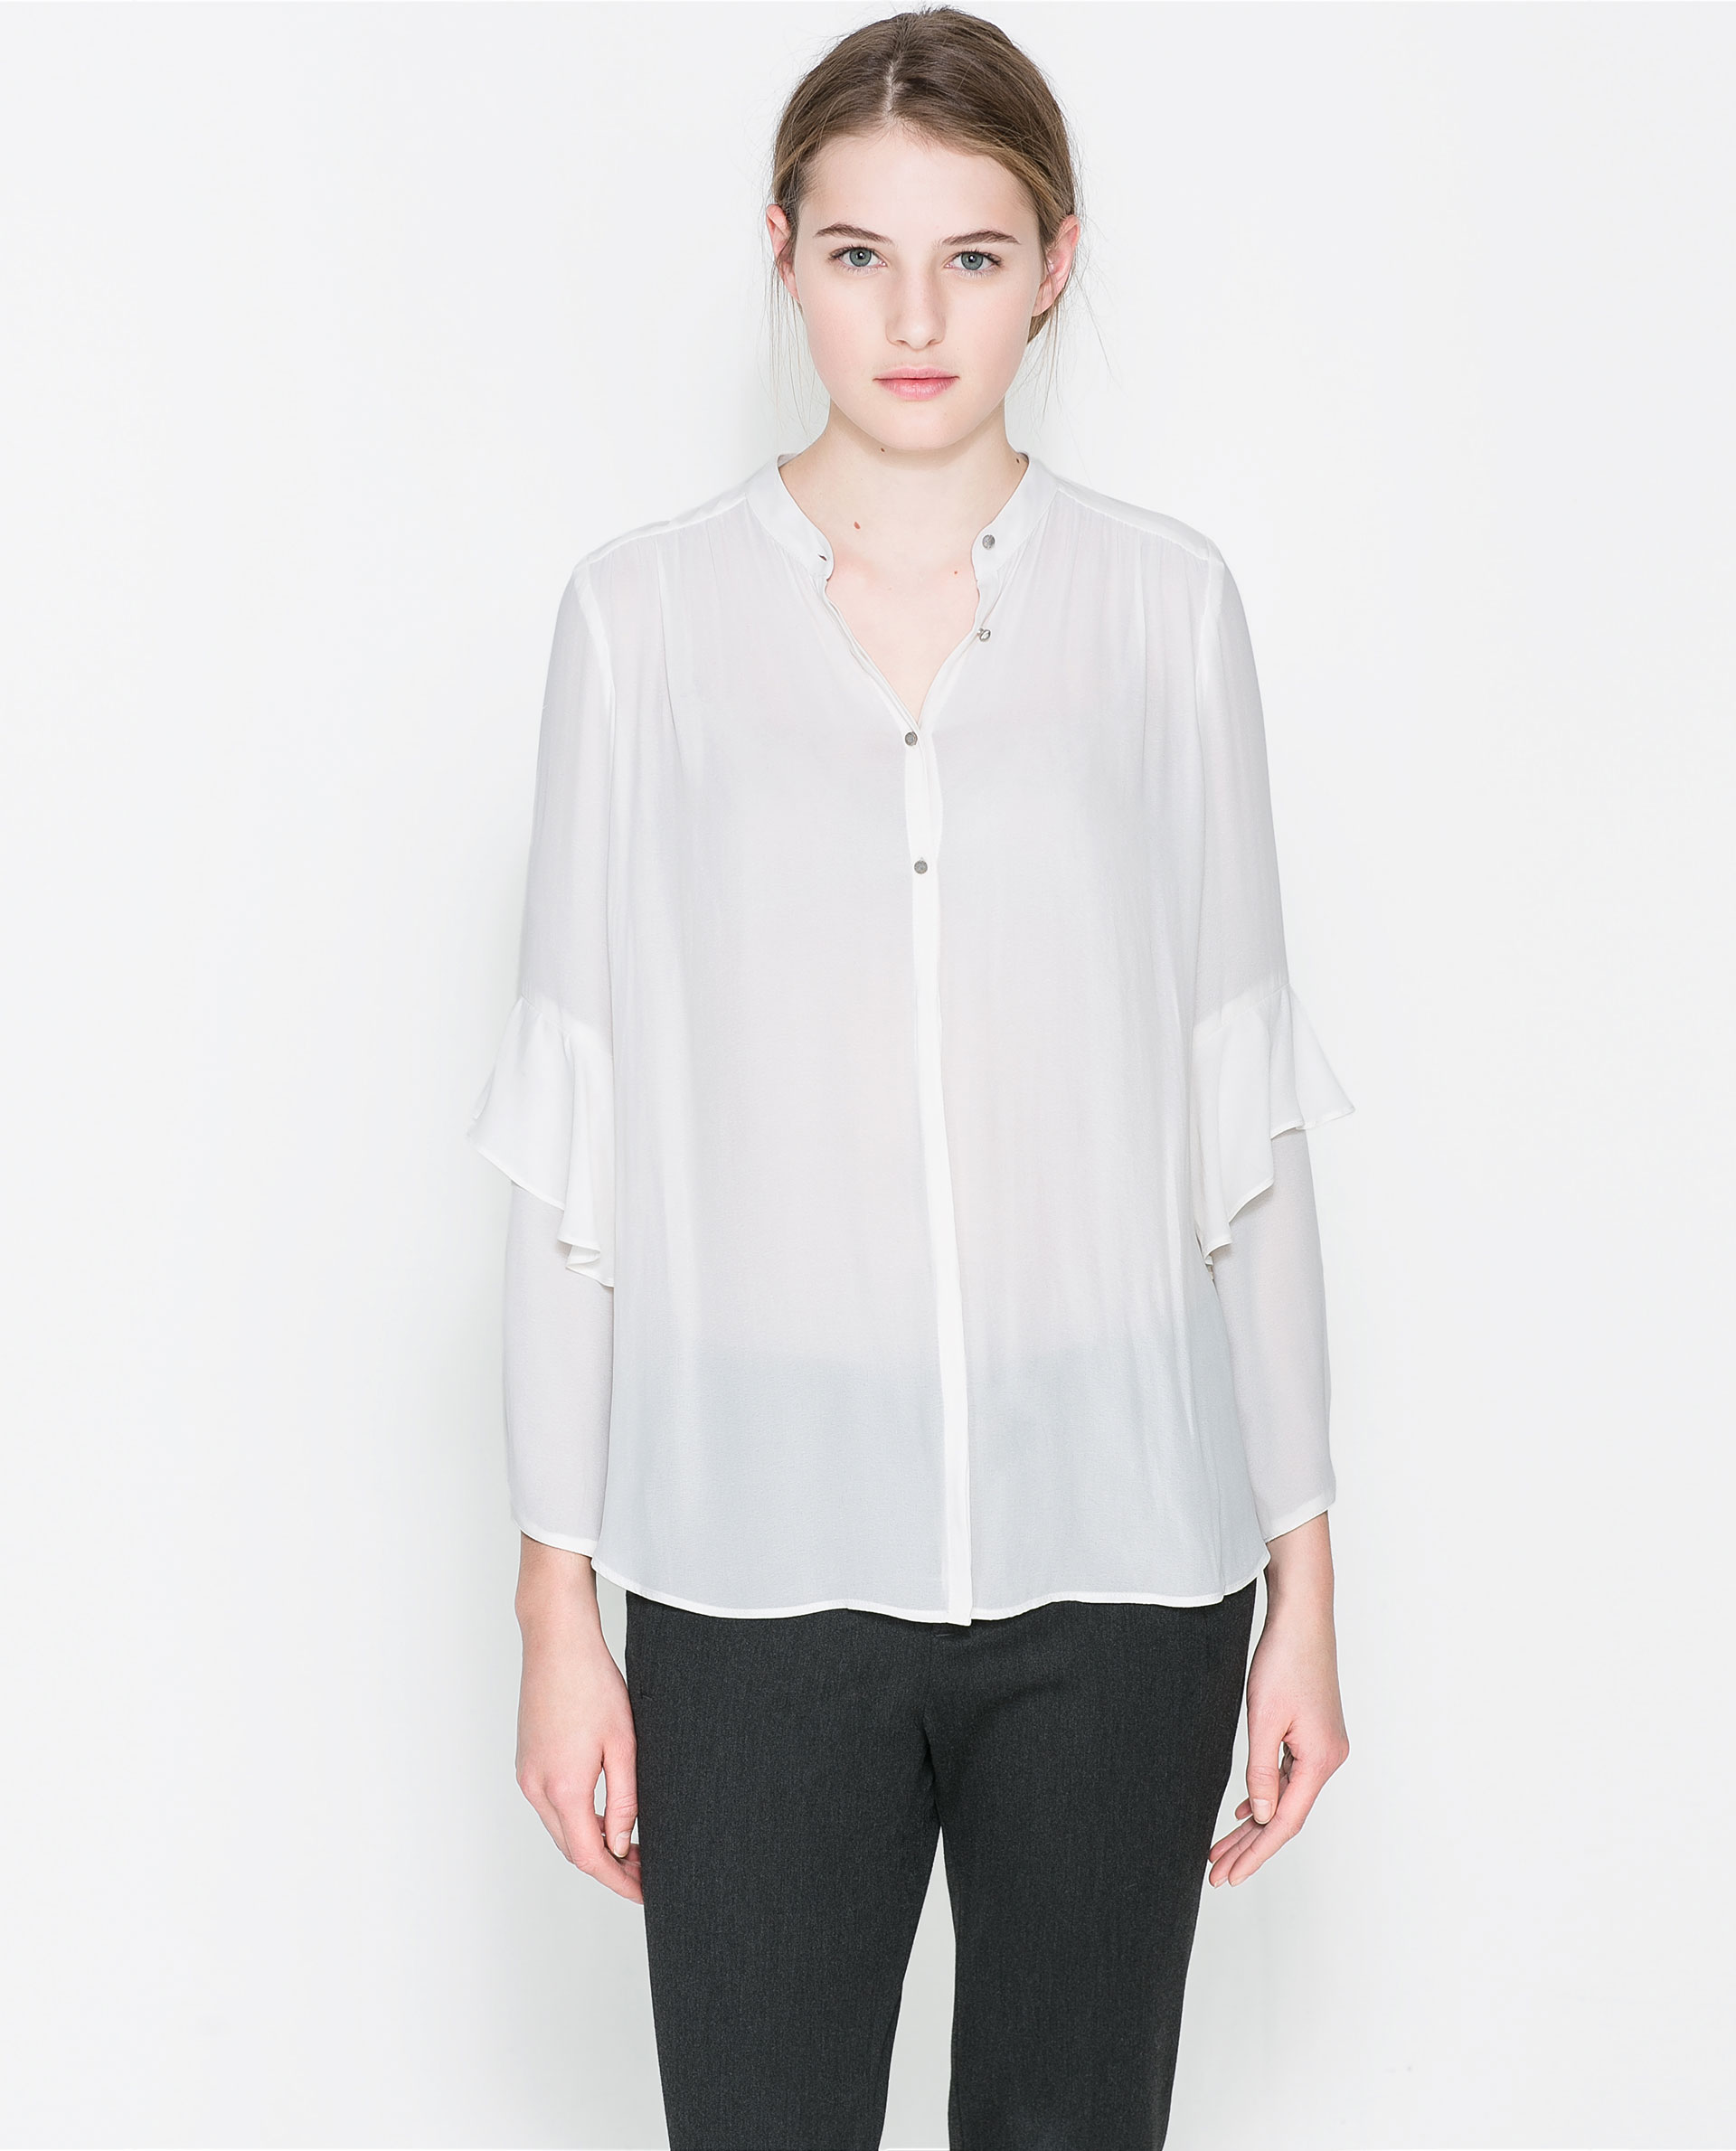 Zara Blouse with Ruffle Sleeves in White (Ecru) | Lyst